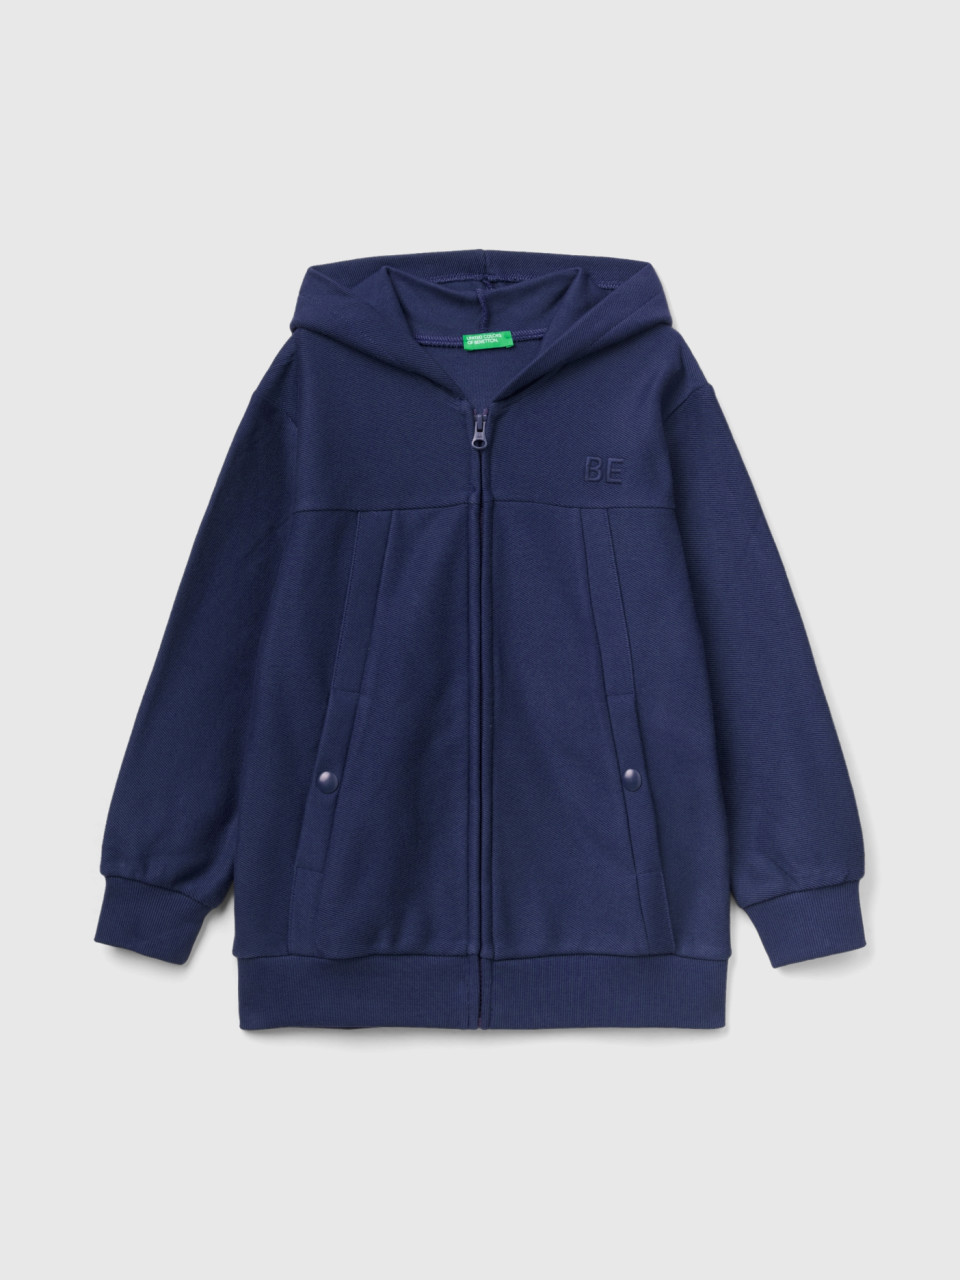 Benetton, Zip-up Sweatshirt With be Embroidery, Dark Blue, Kids